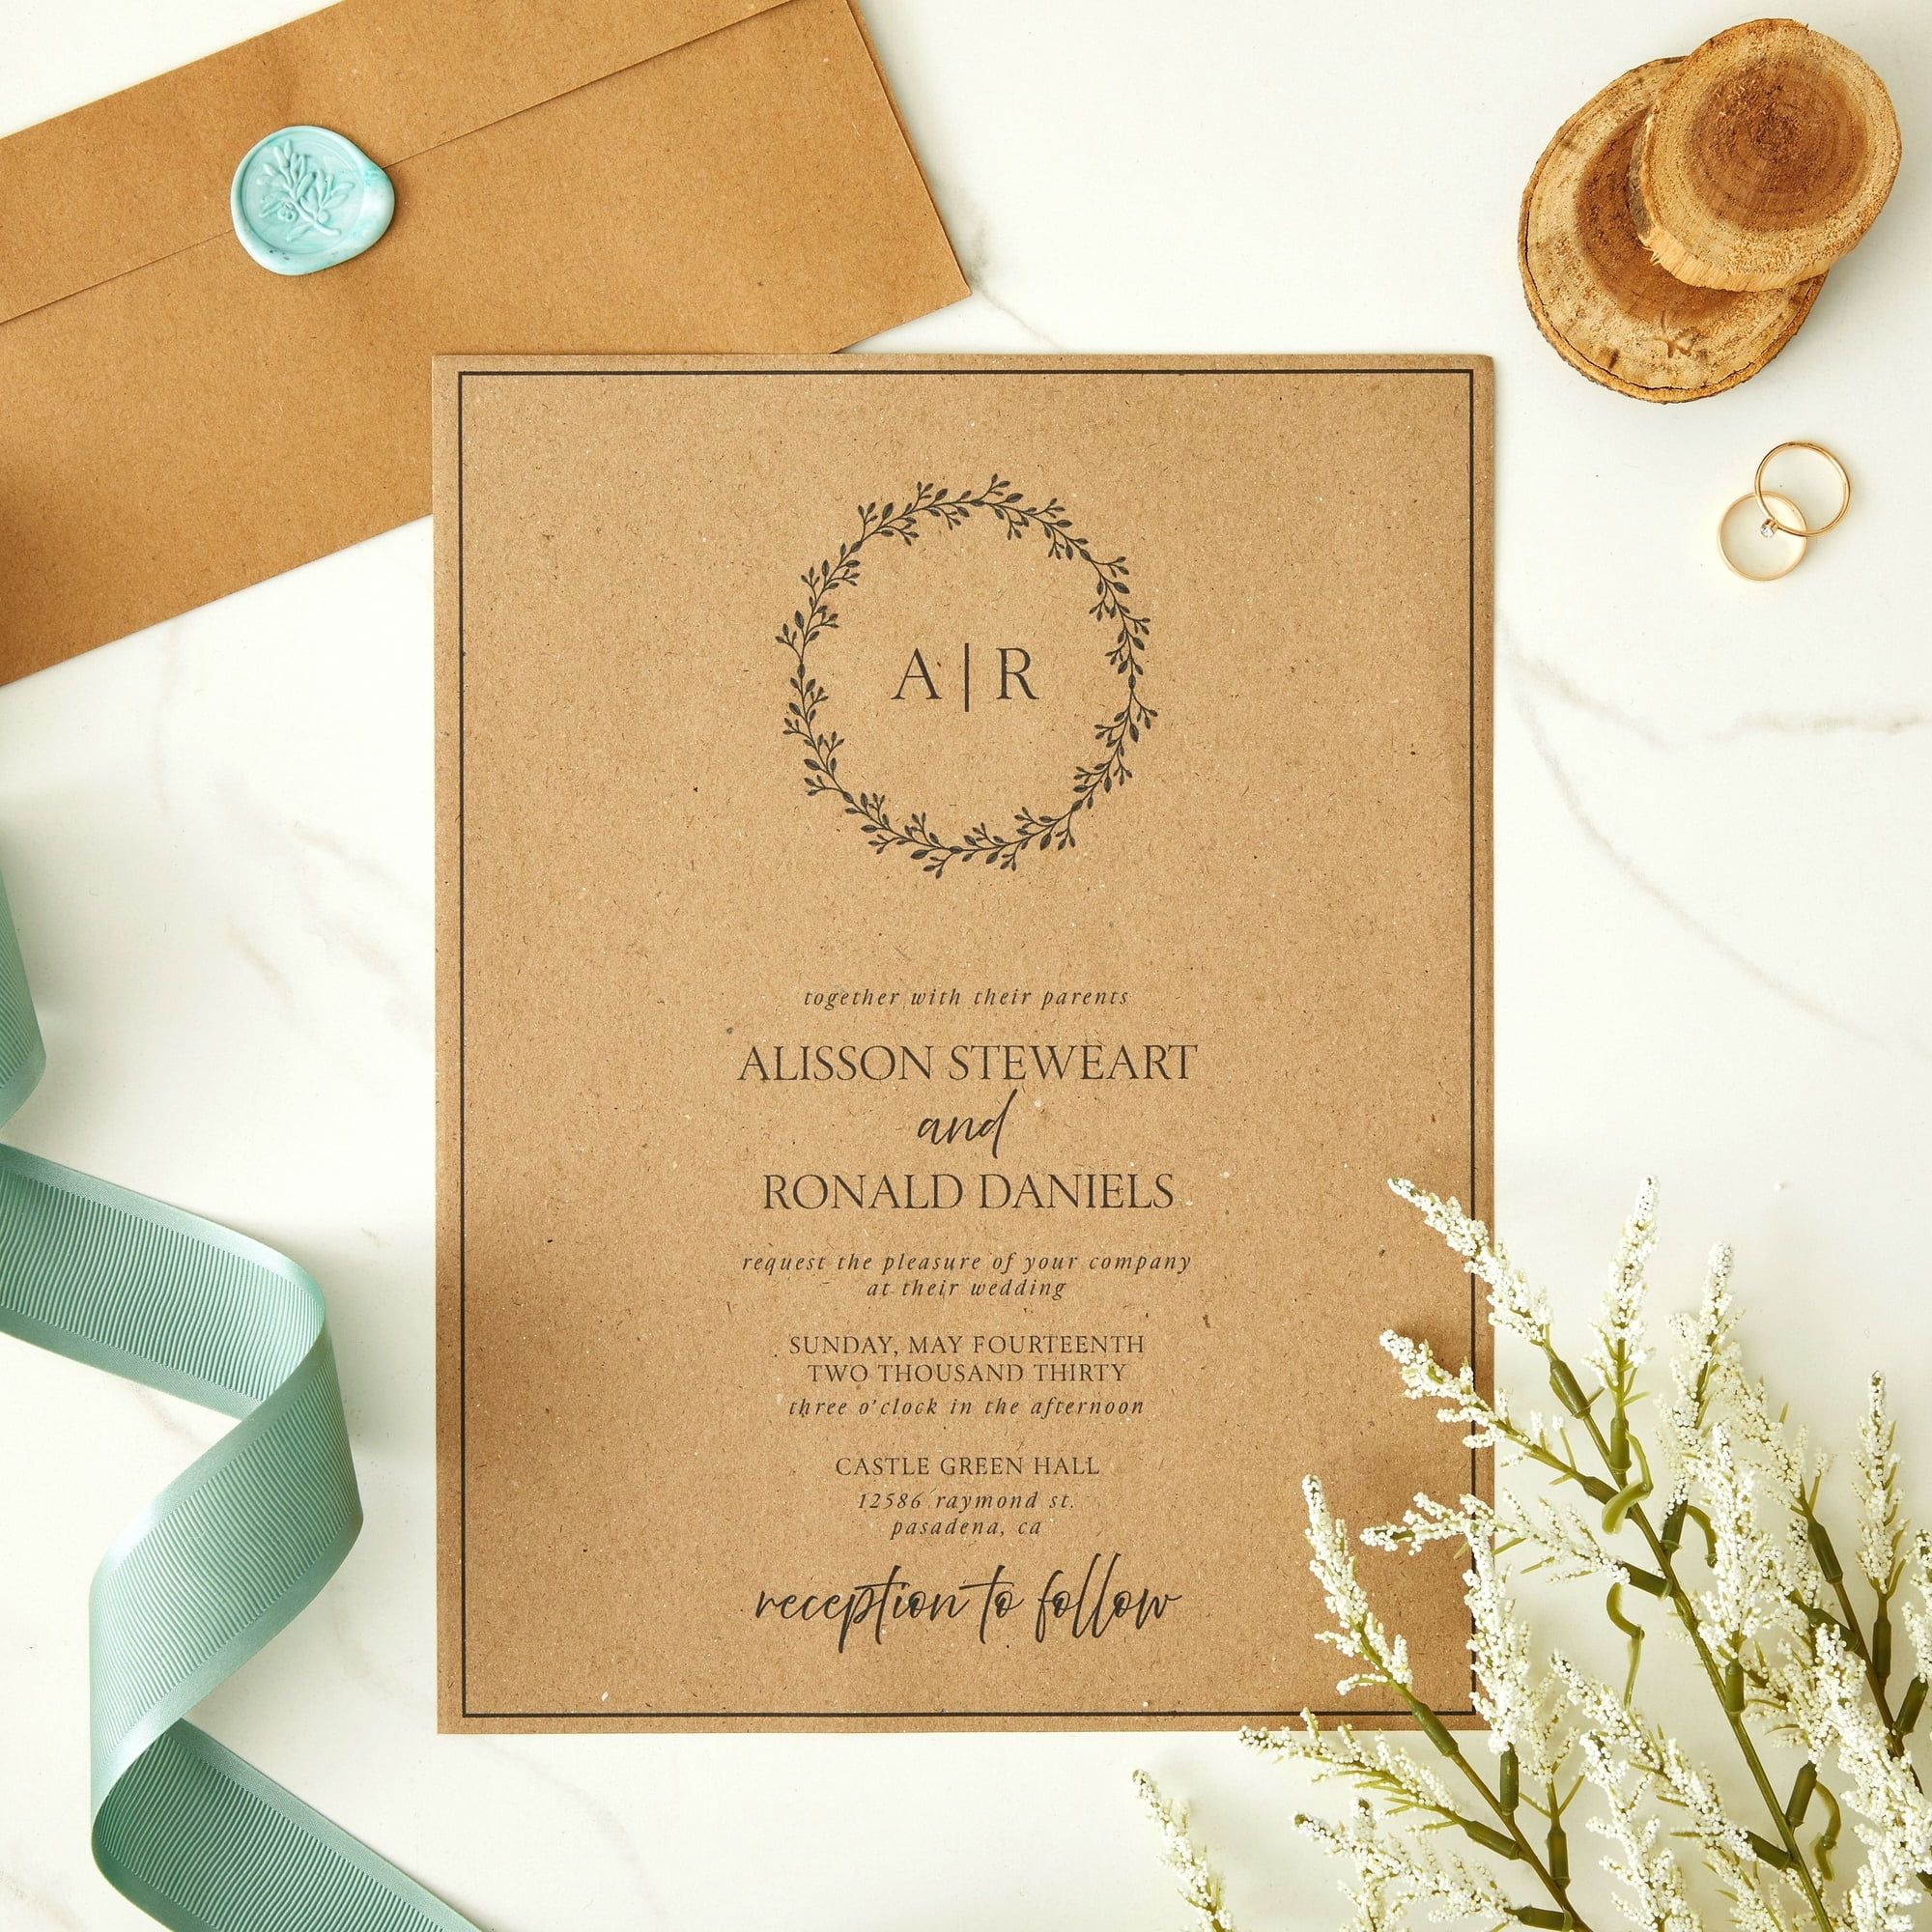 Brown Kraft Paper Cardstock Sheets for Invitations, Menus, Crafts